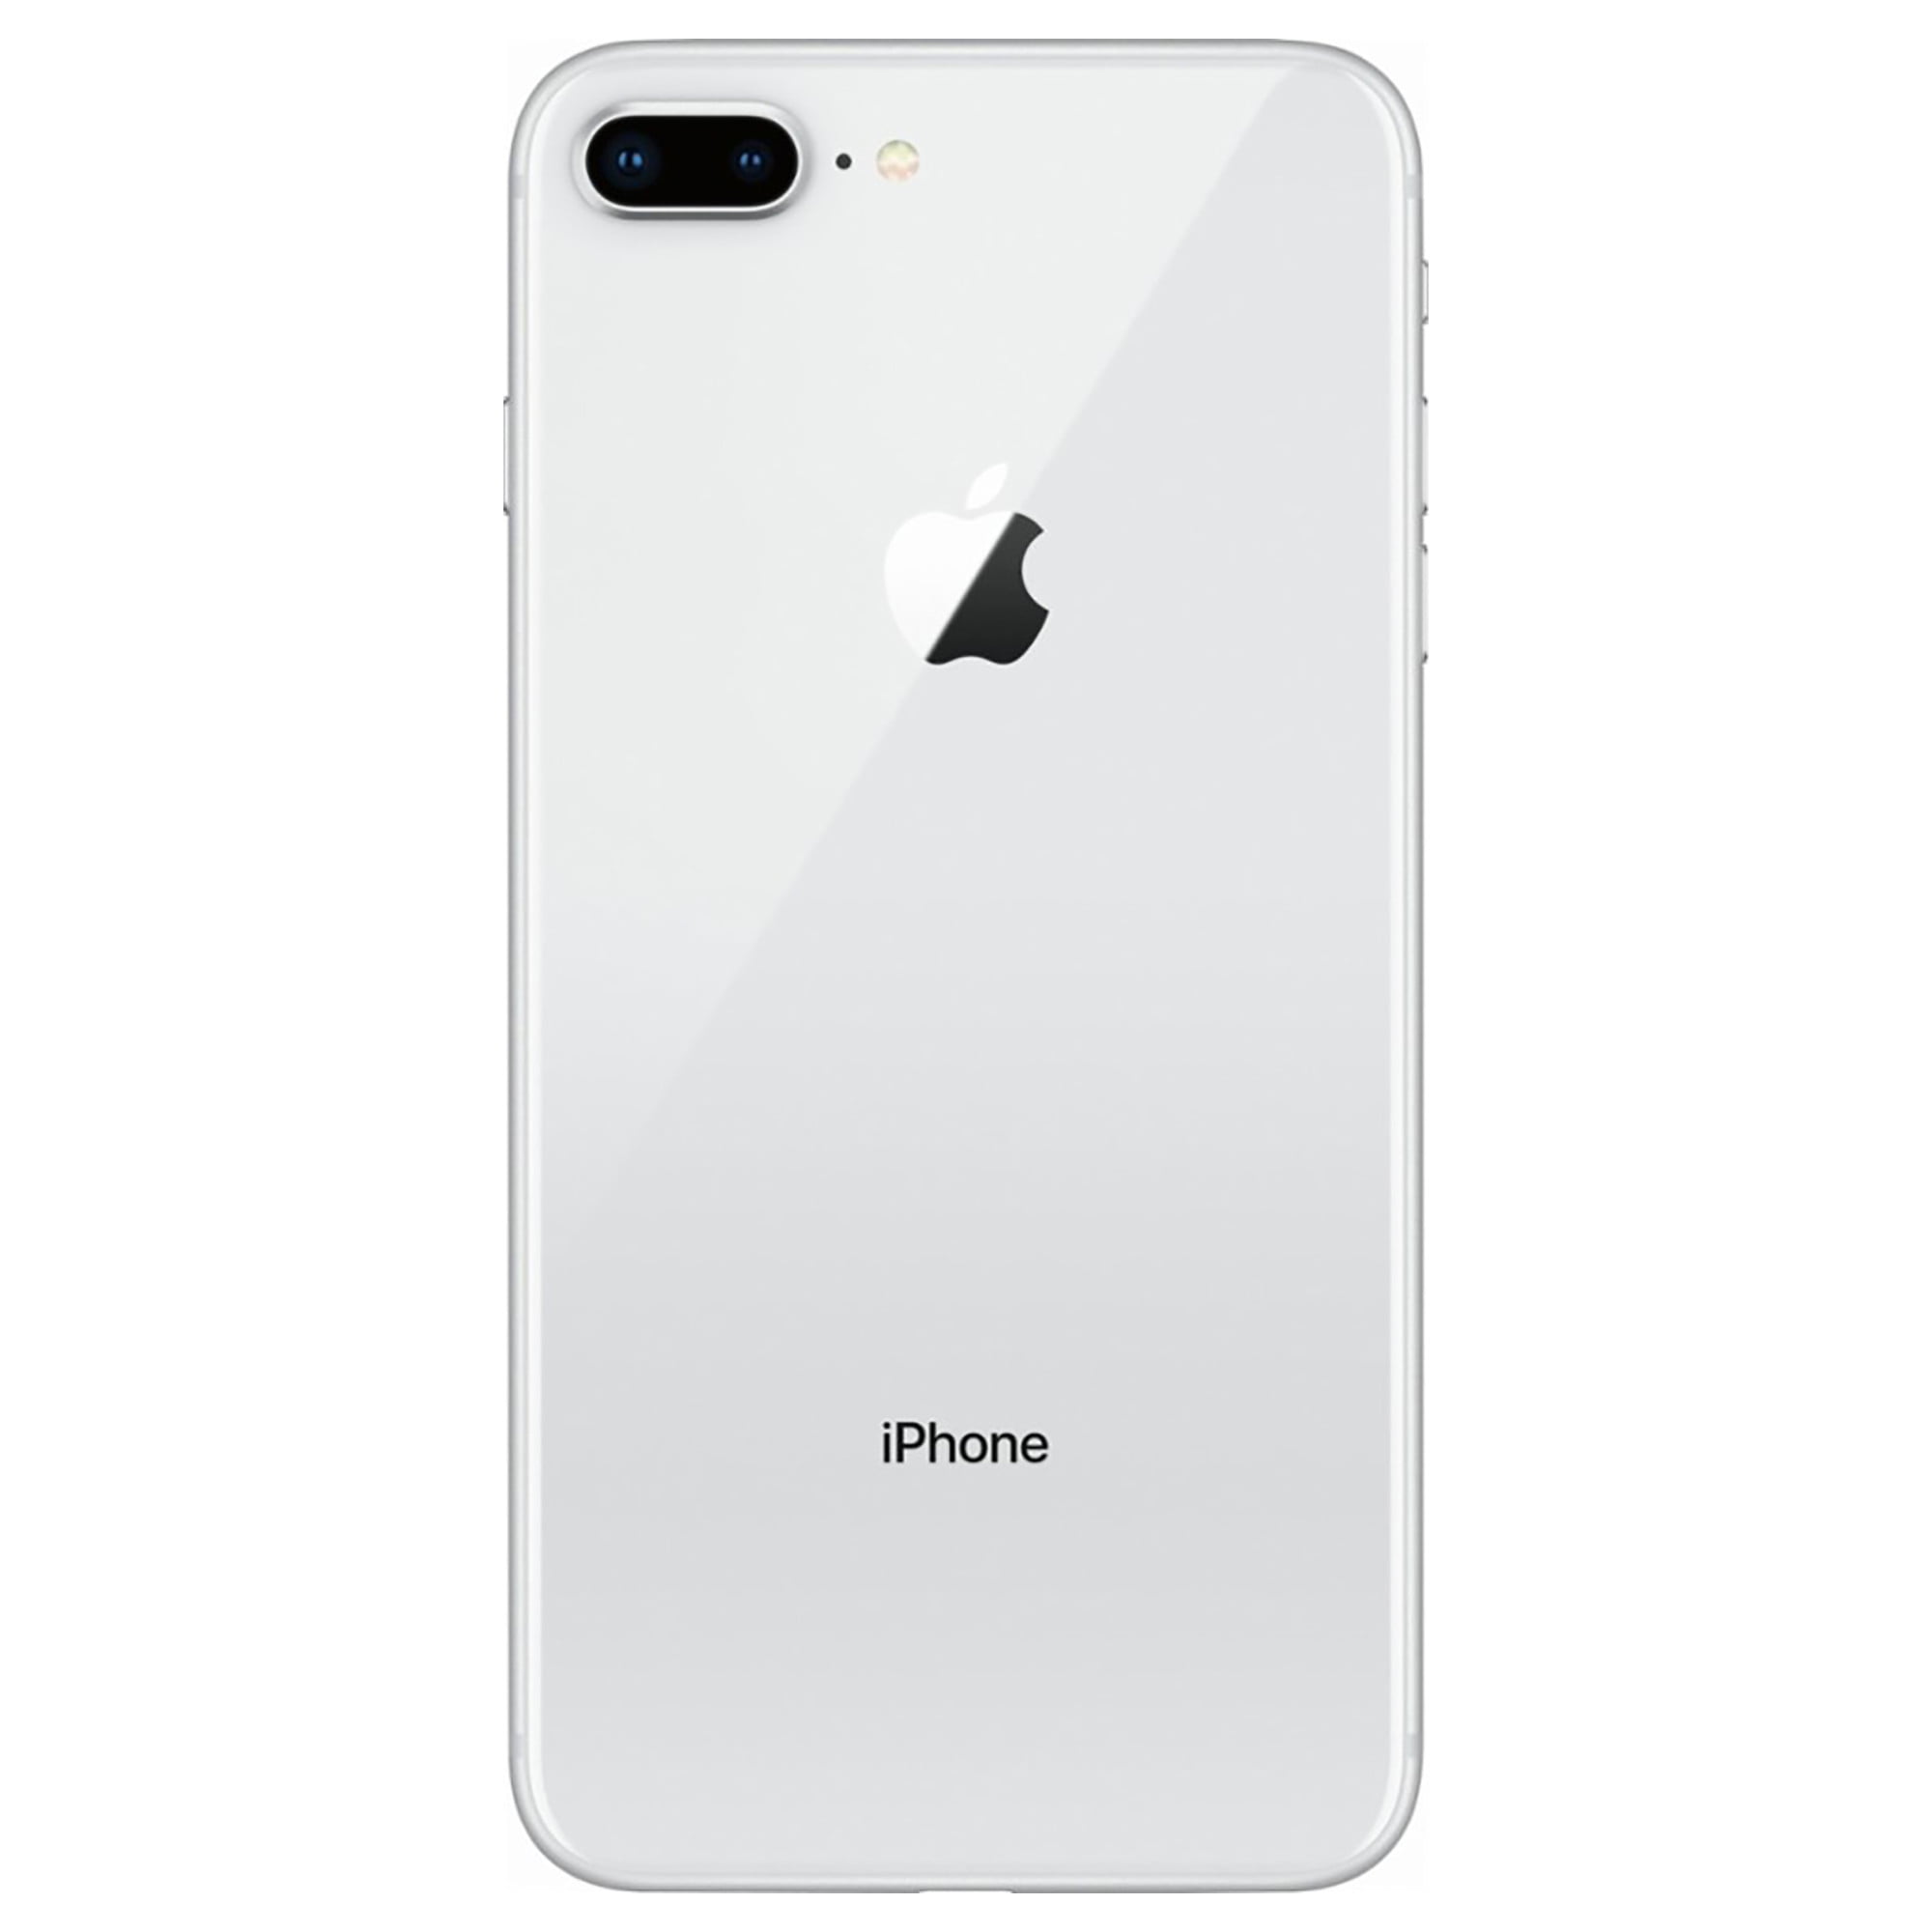 Apple iPhone 8 Plus 64GB Space Gray Fully Unlocked (Verizon + AT&T 